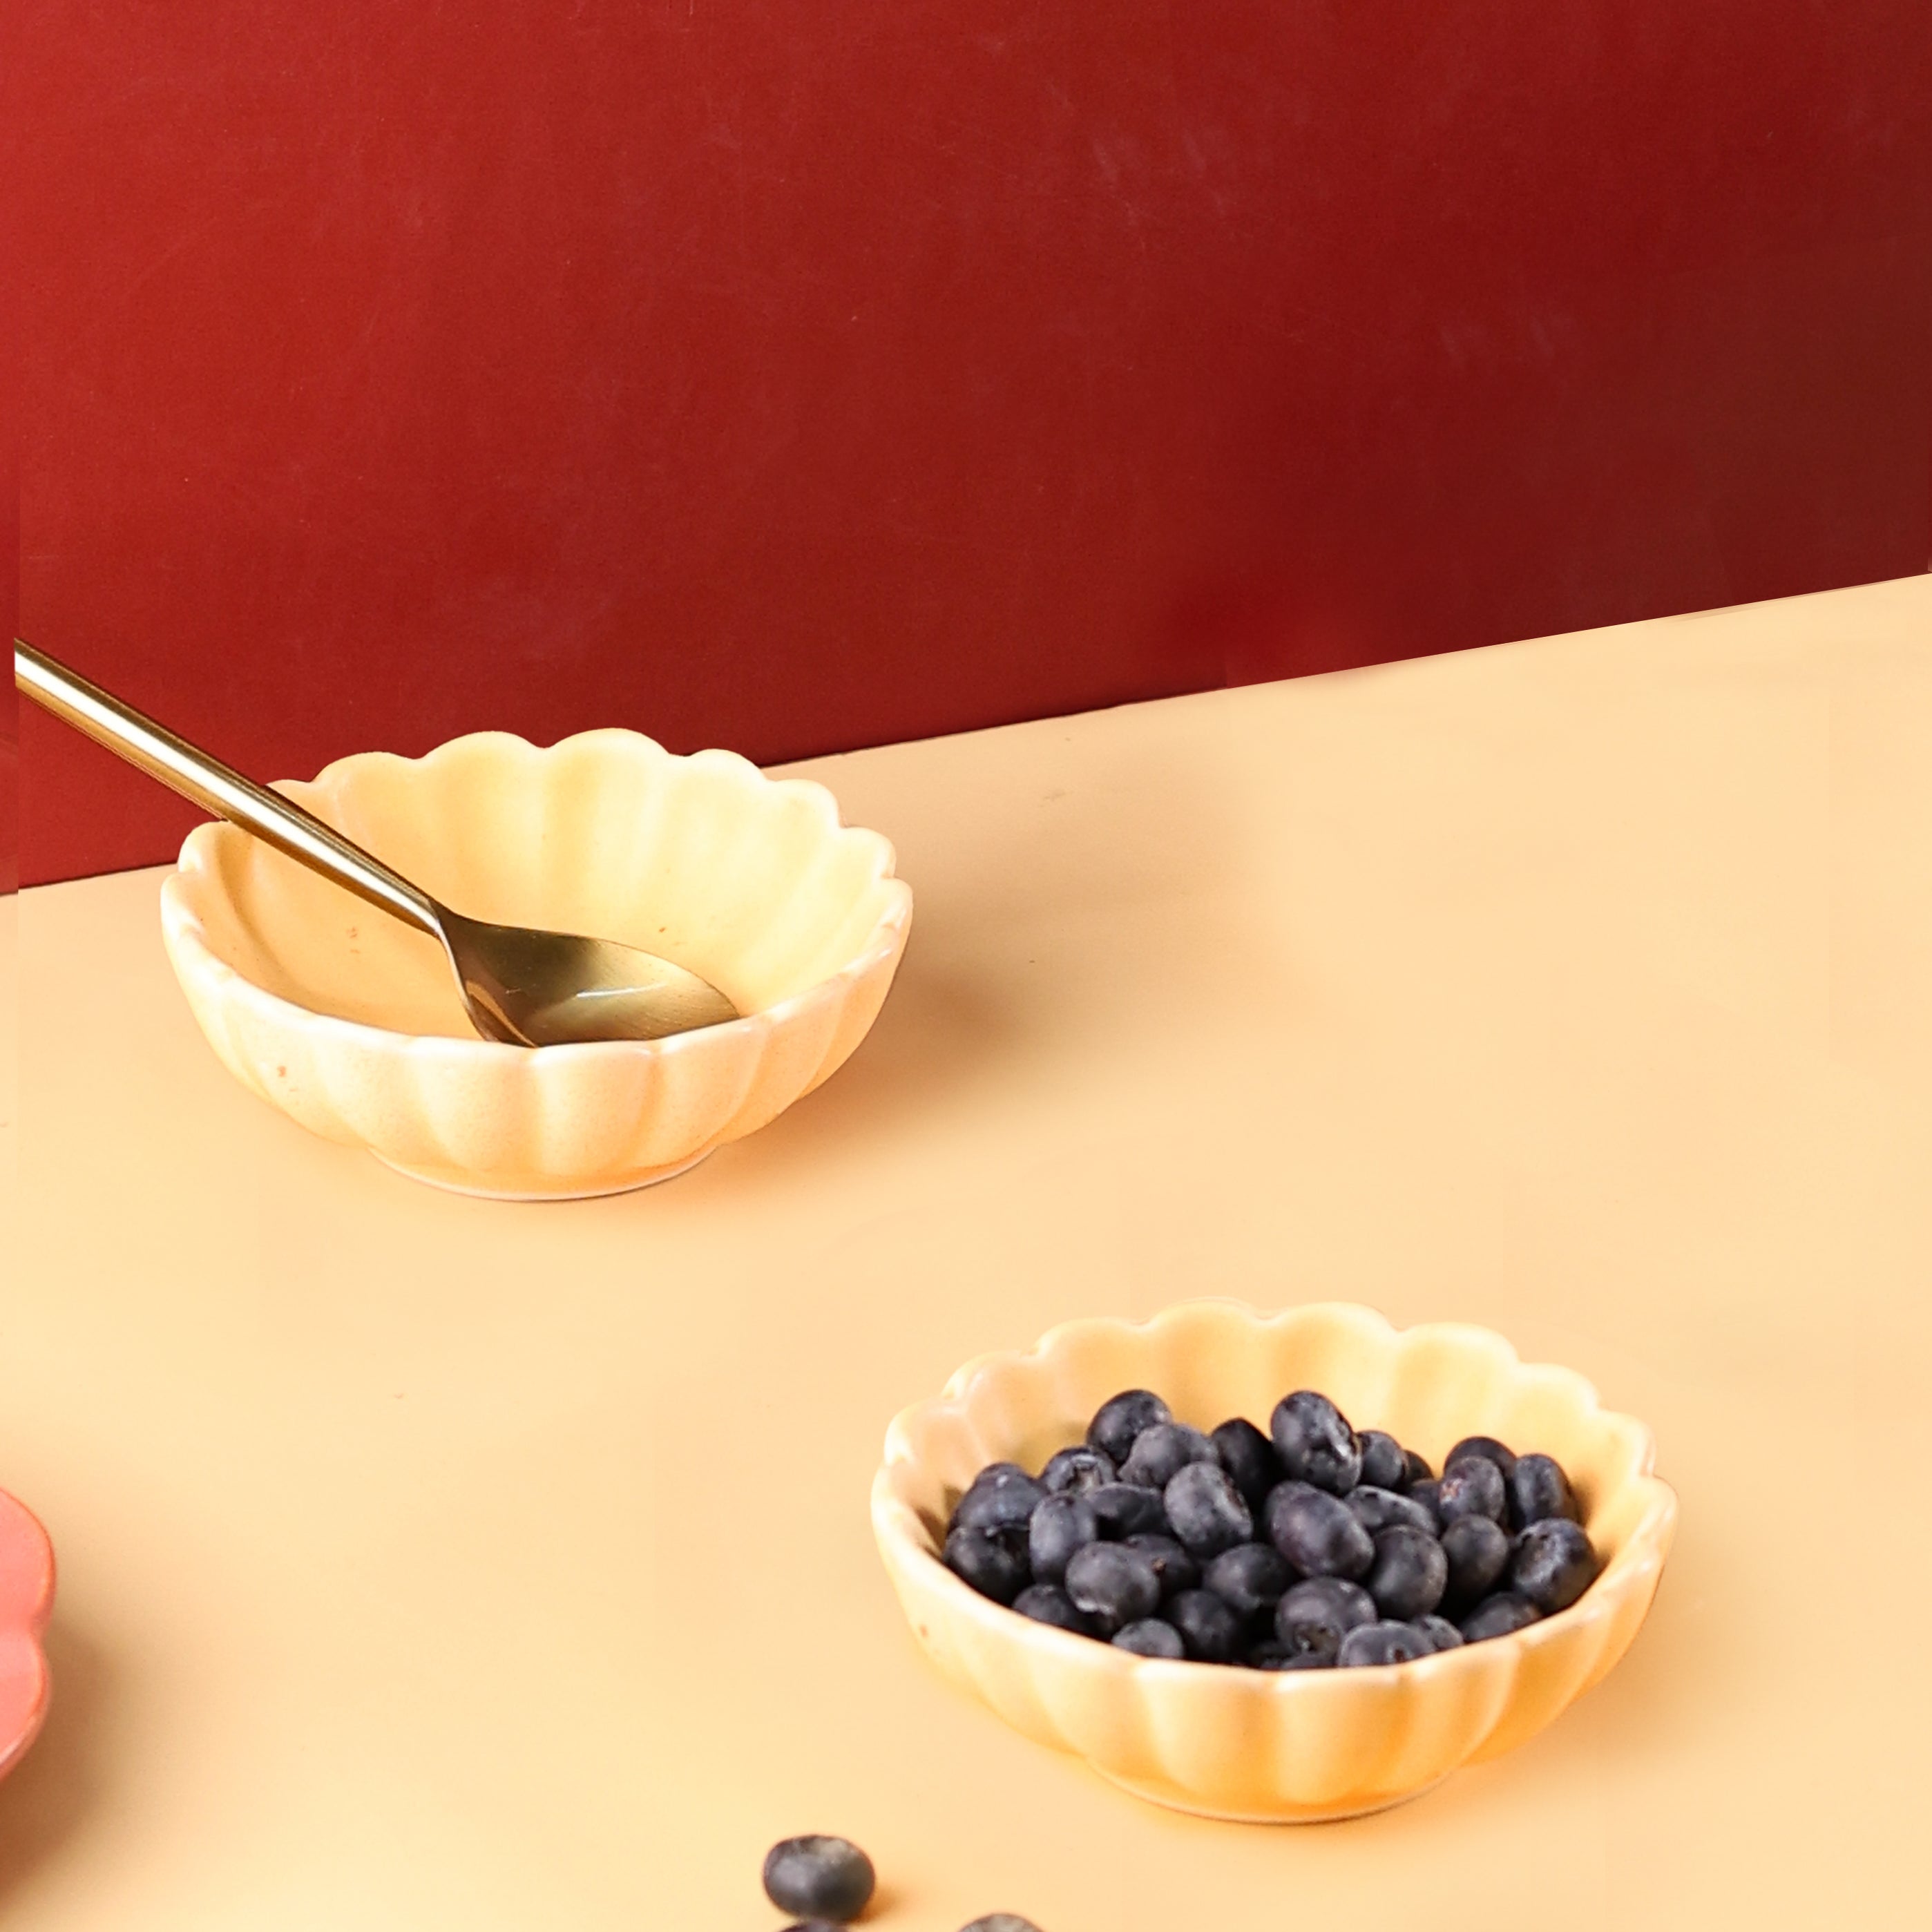 Genda phool ice cream bowl with berries